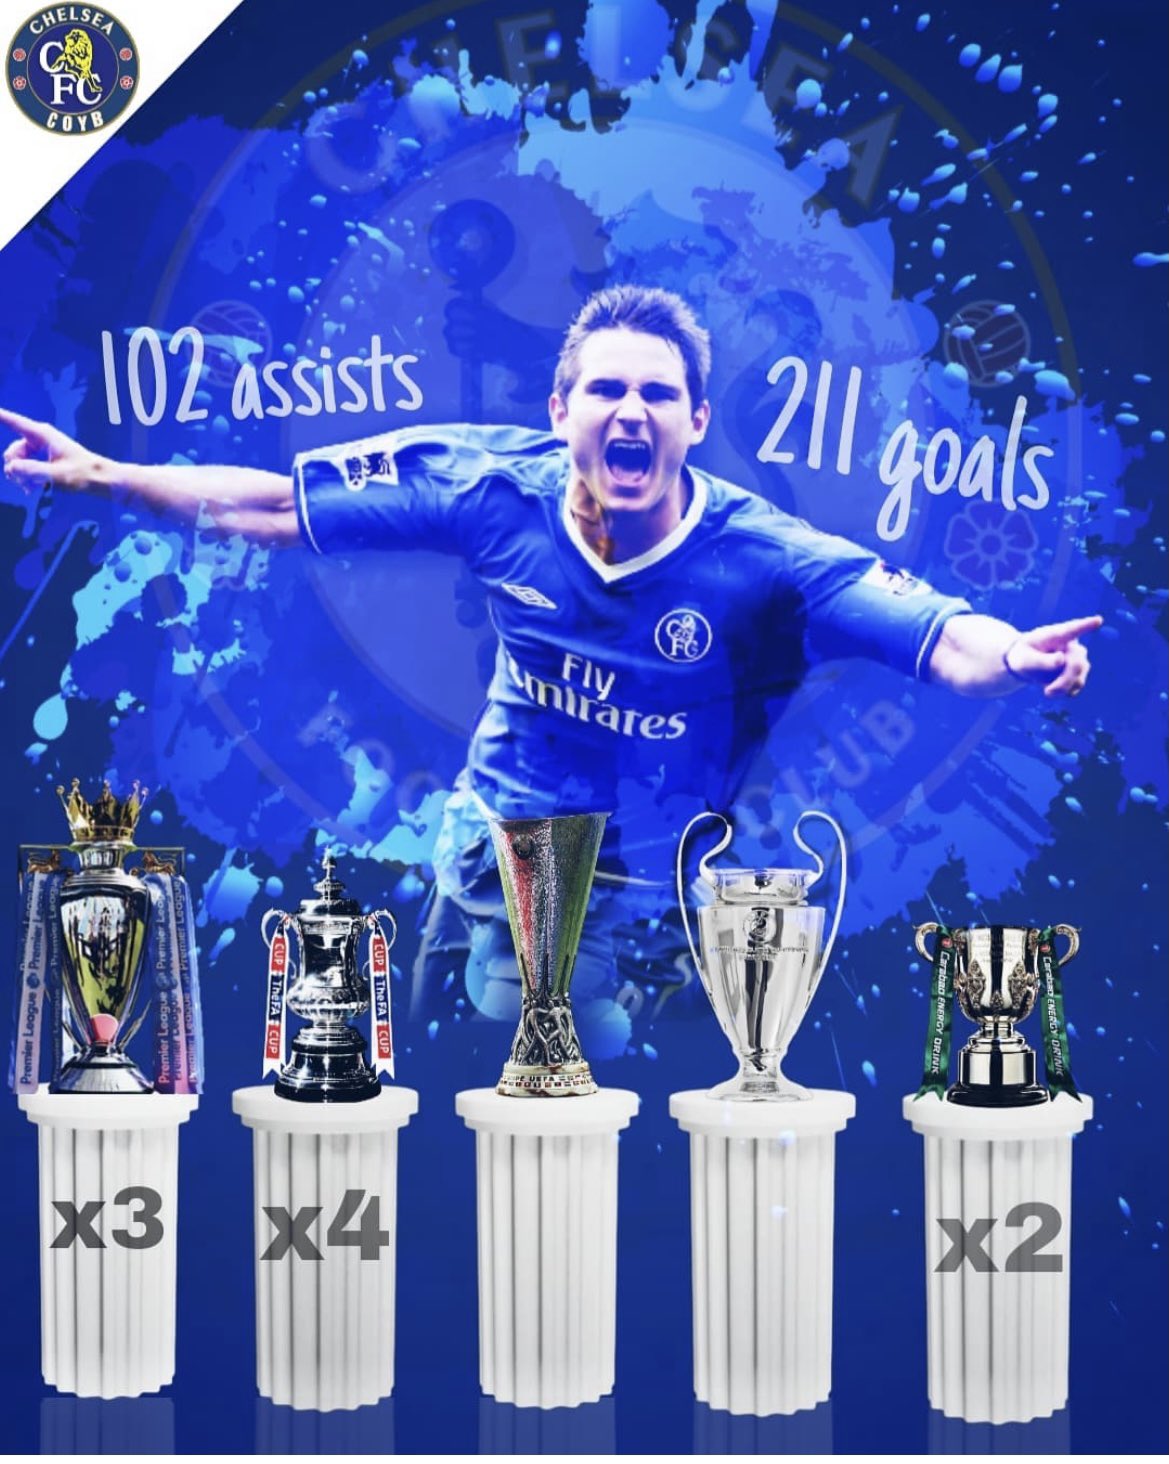 UEFA Champions League on X: Happy birthday, Chelsea legend & 2012 #UCL  winner Frank Lampard!  / X